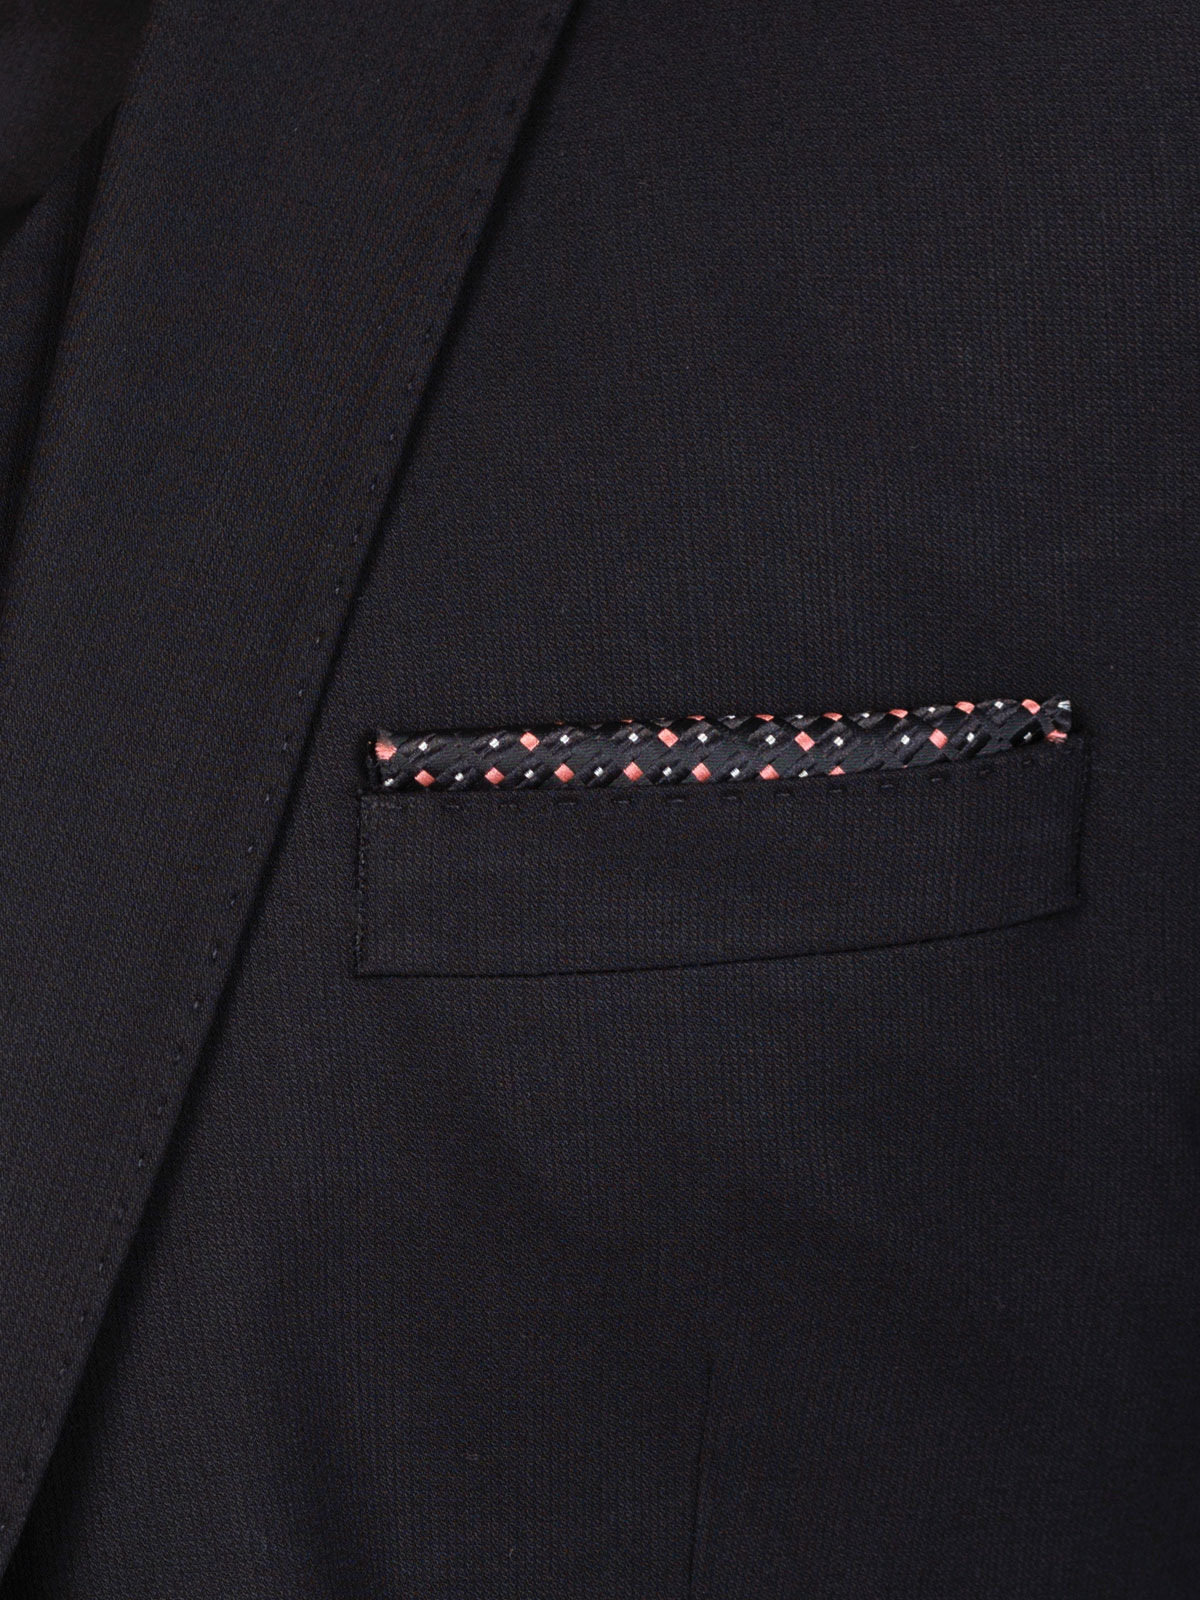 Black fitted elegant jacket - 64120 € 141.73 img3